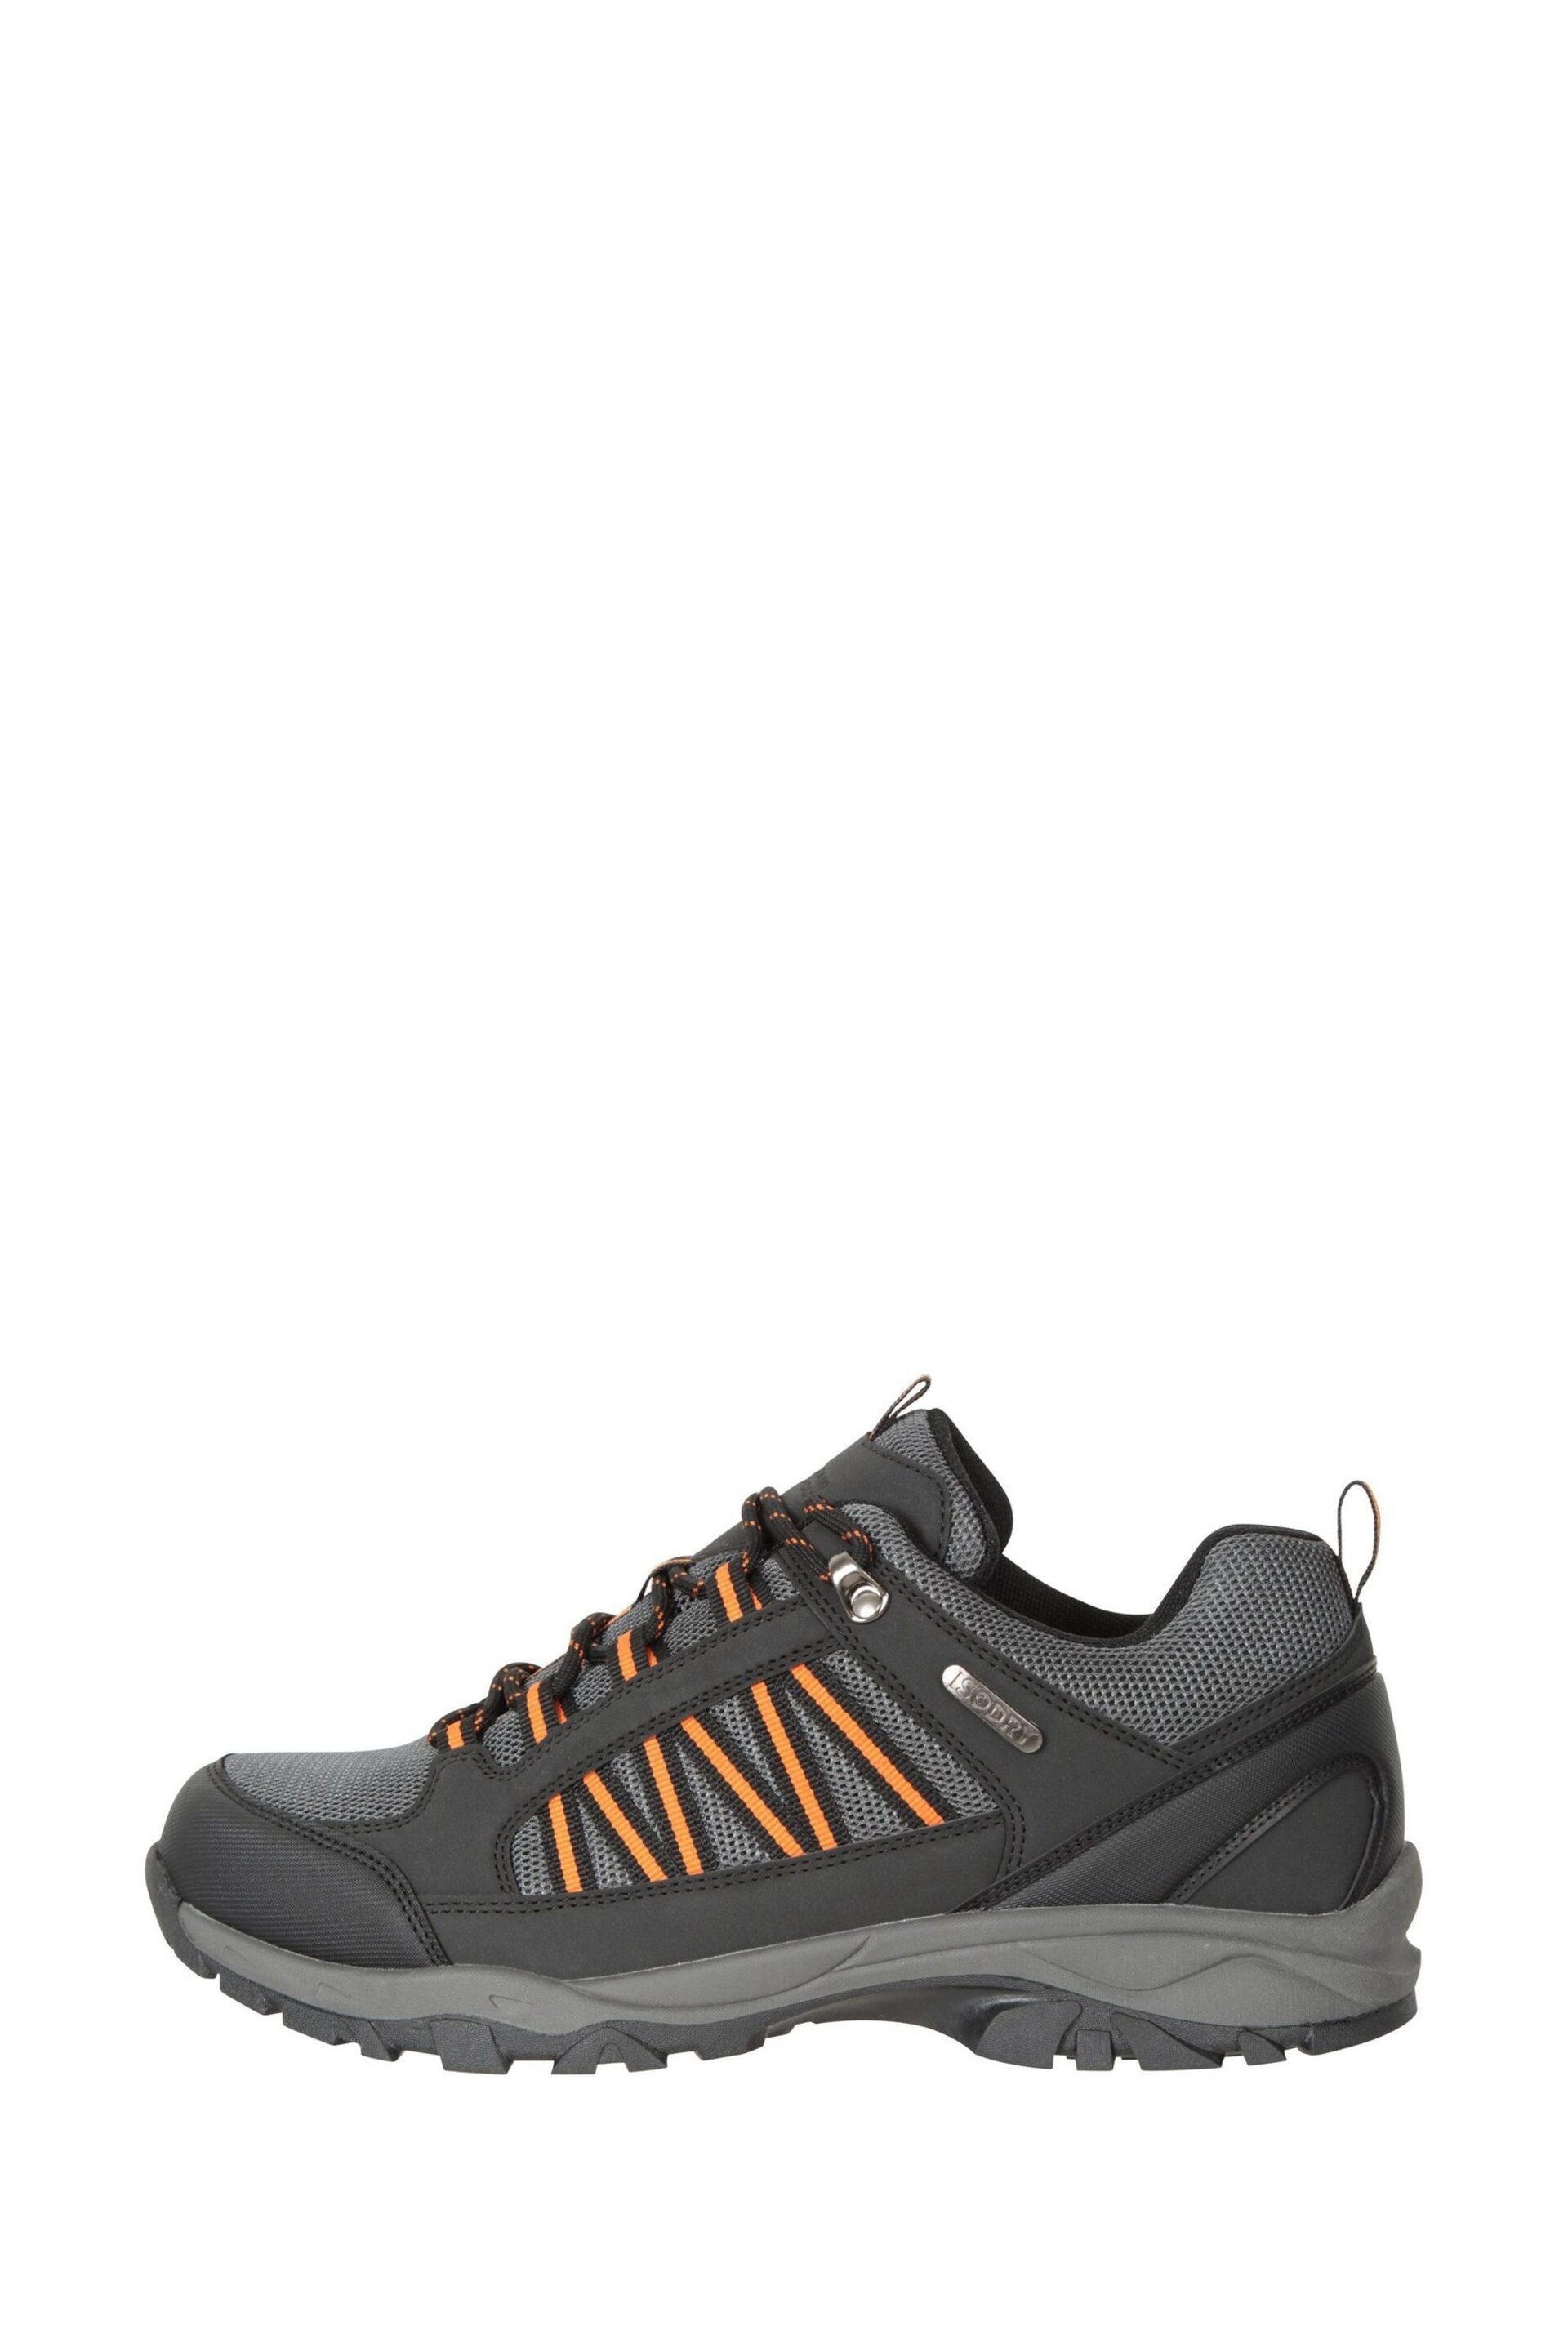 Mountain Warehouse Black Mens Path Waterproof Outdoor Walking Shoes - Image 2 of 6